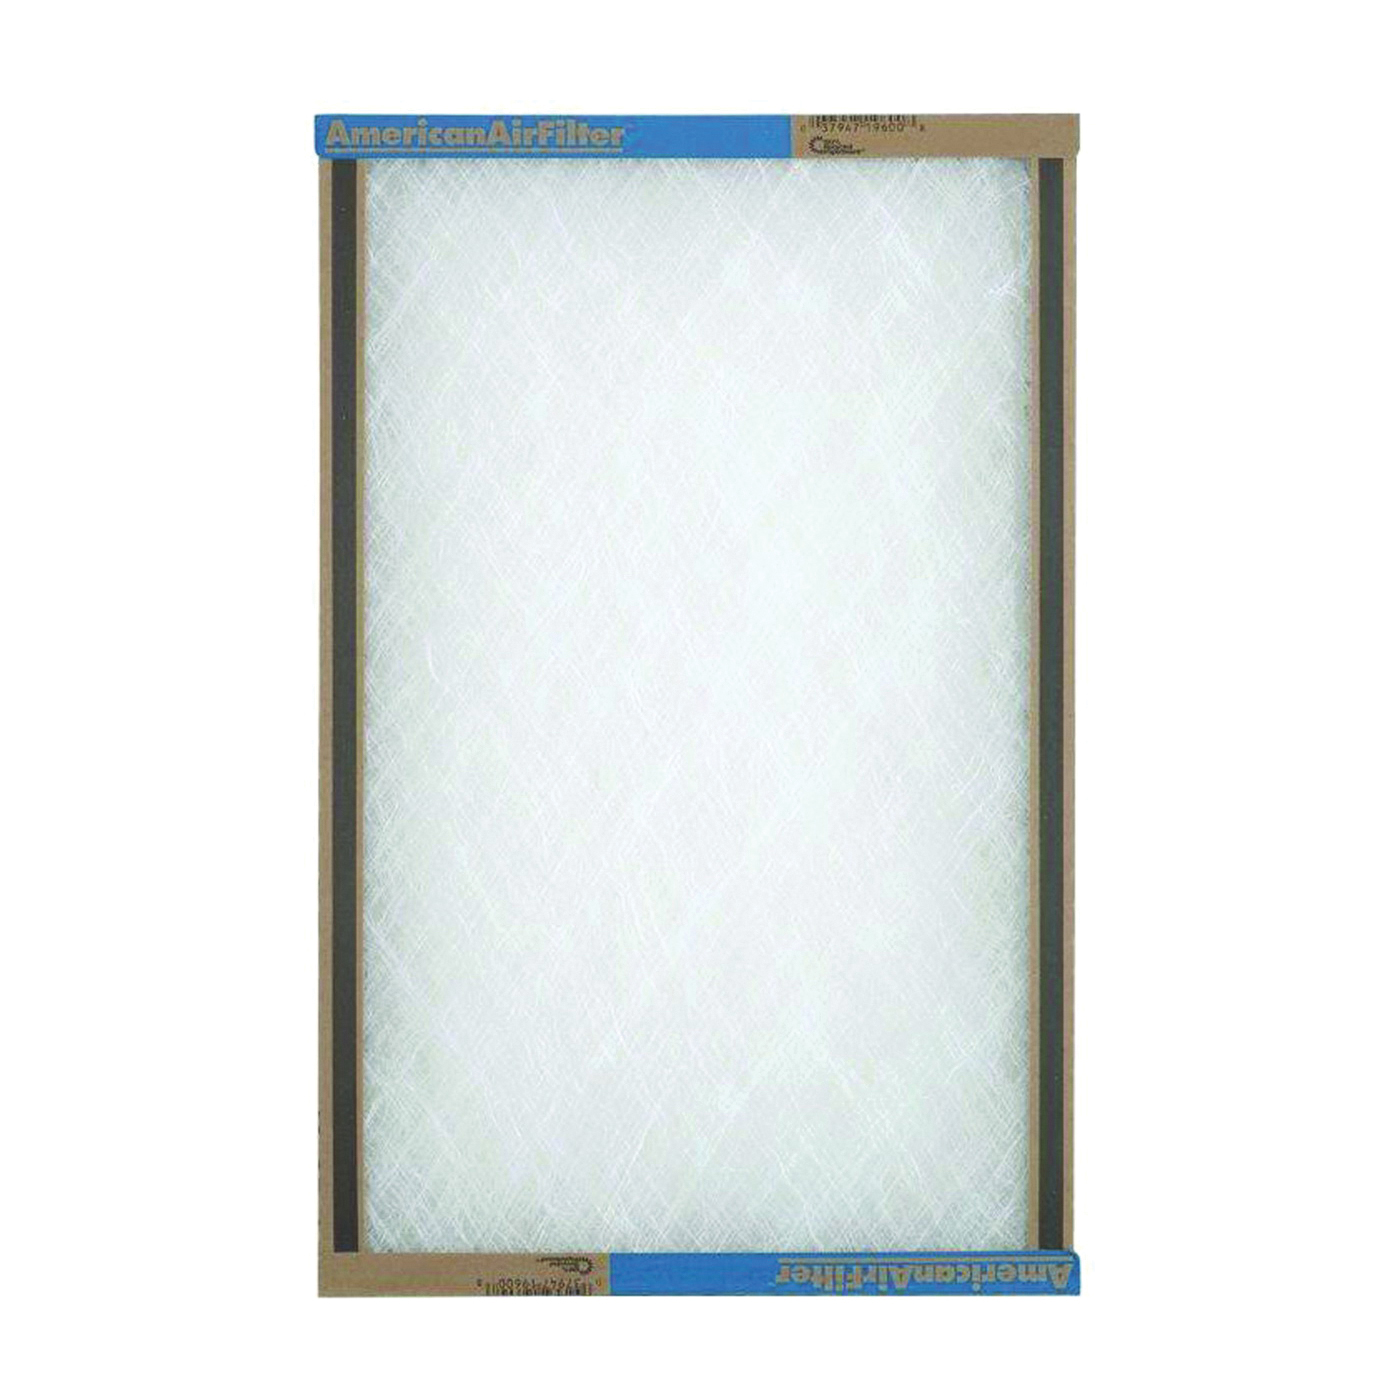 112121 Panel Air Filter, 12 x 12 x 1, Chipboard Frame